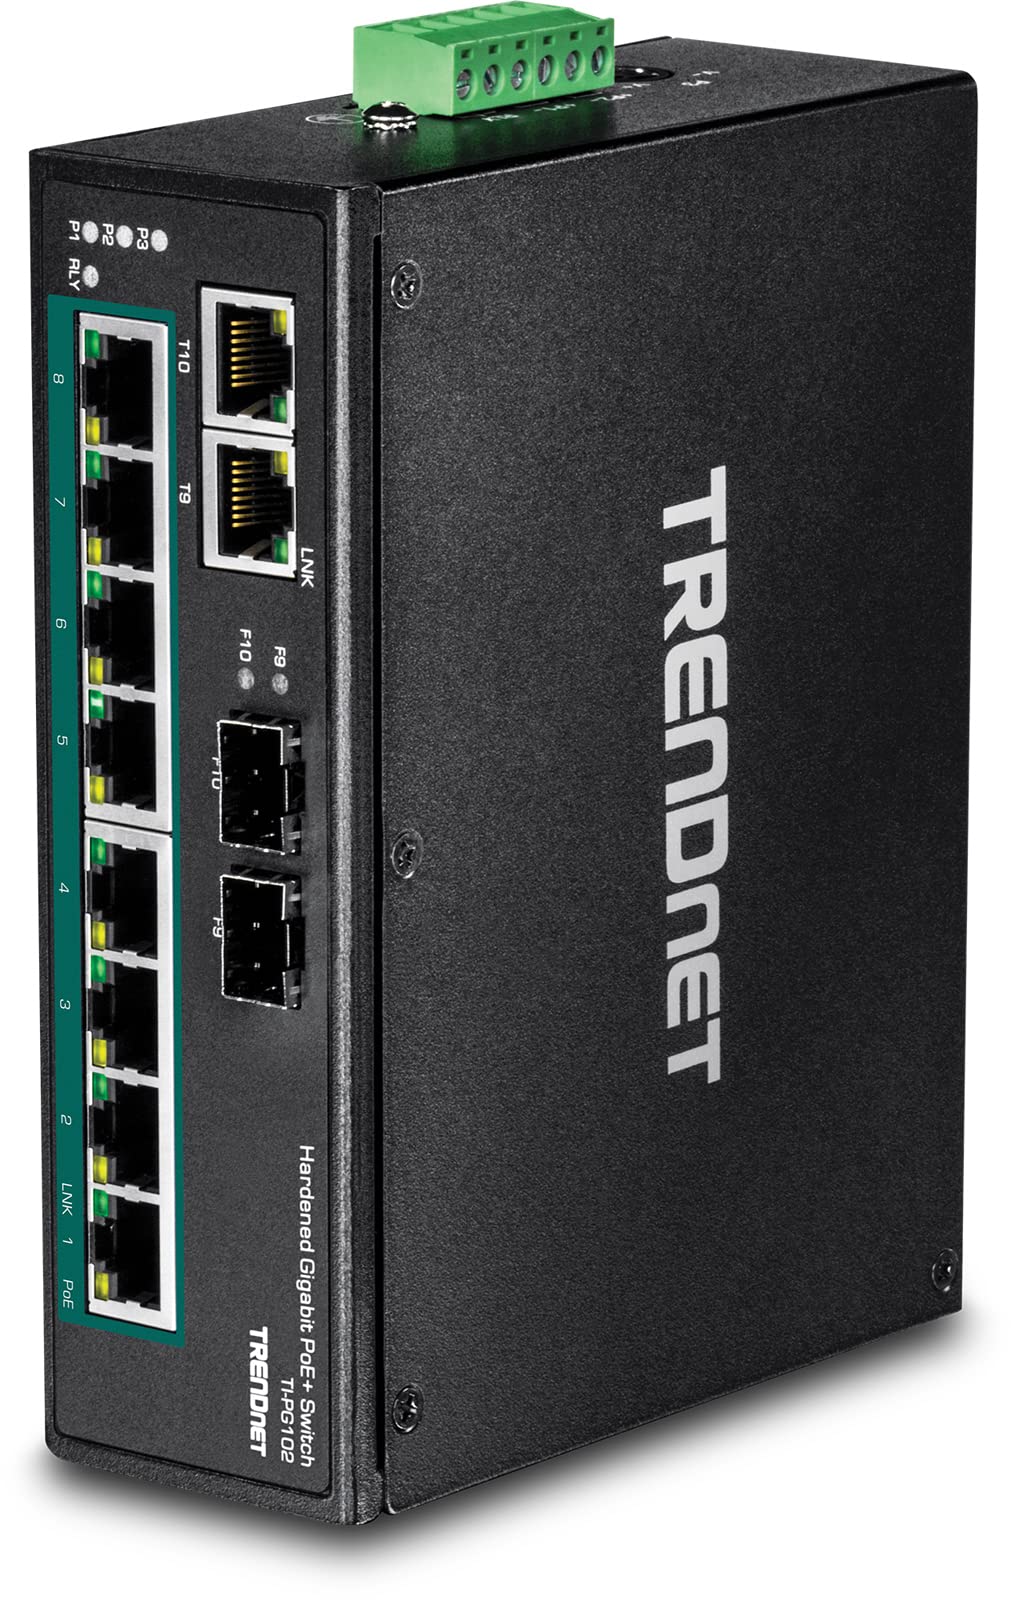 TRENDnet 10-Port Industrial Gigabit PoE+ DIN-Rail Switch, 8 x Gigabit PoE+ Ports, DIN-Rail Mount, 2 x SFP Slots, 240W PoE Power Budget, Network Swi...